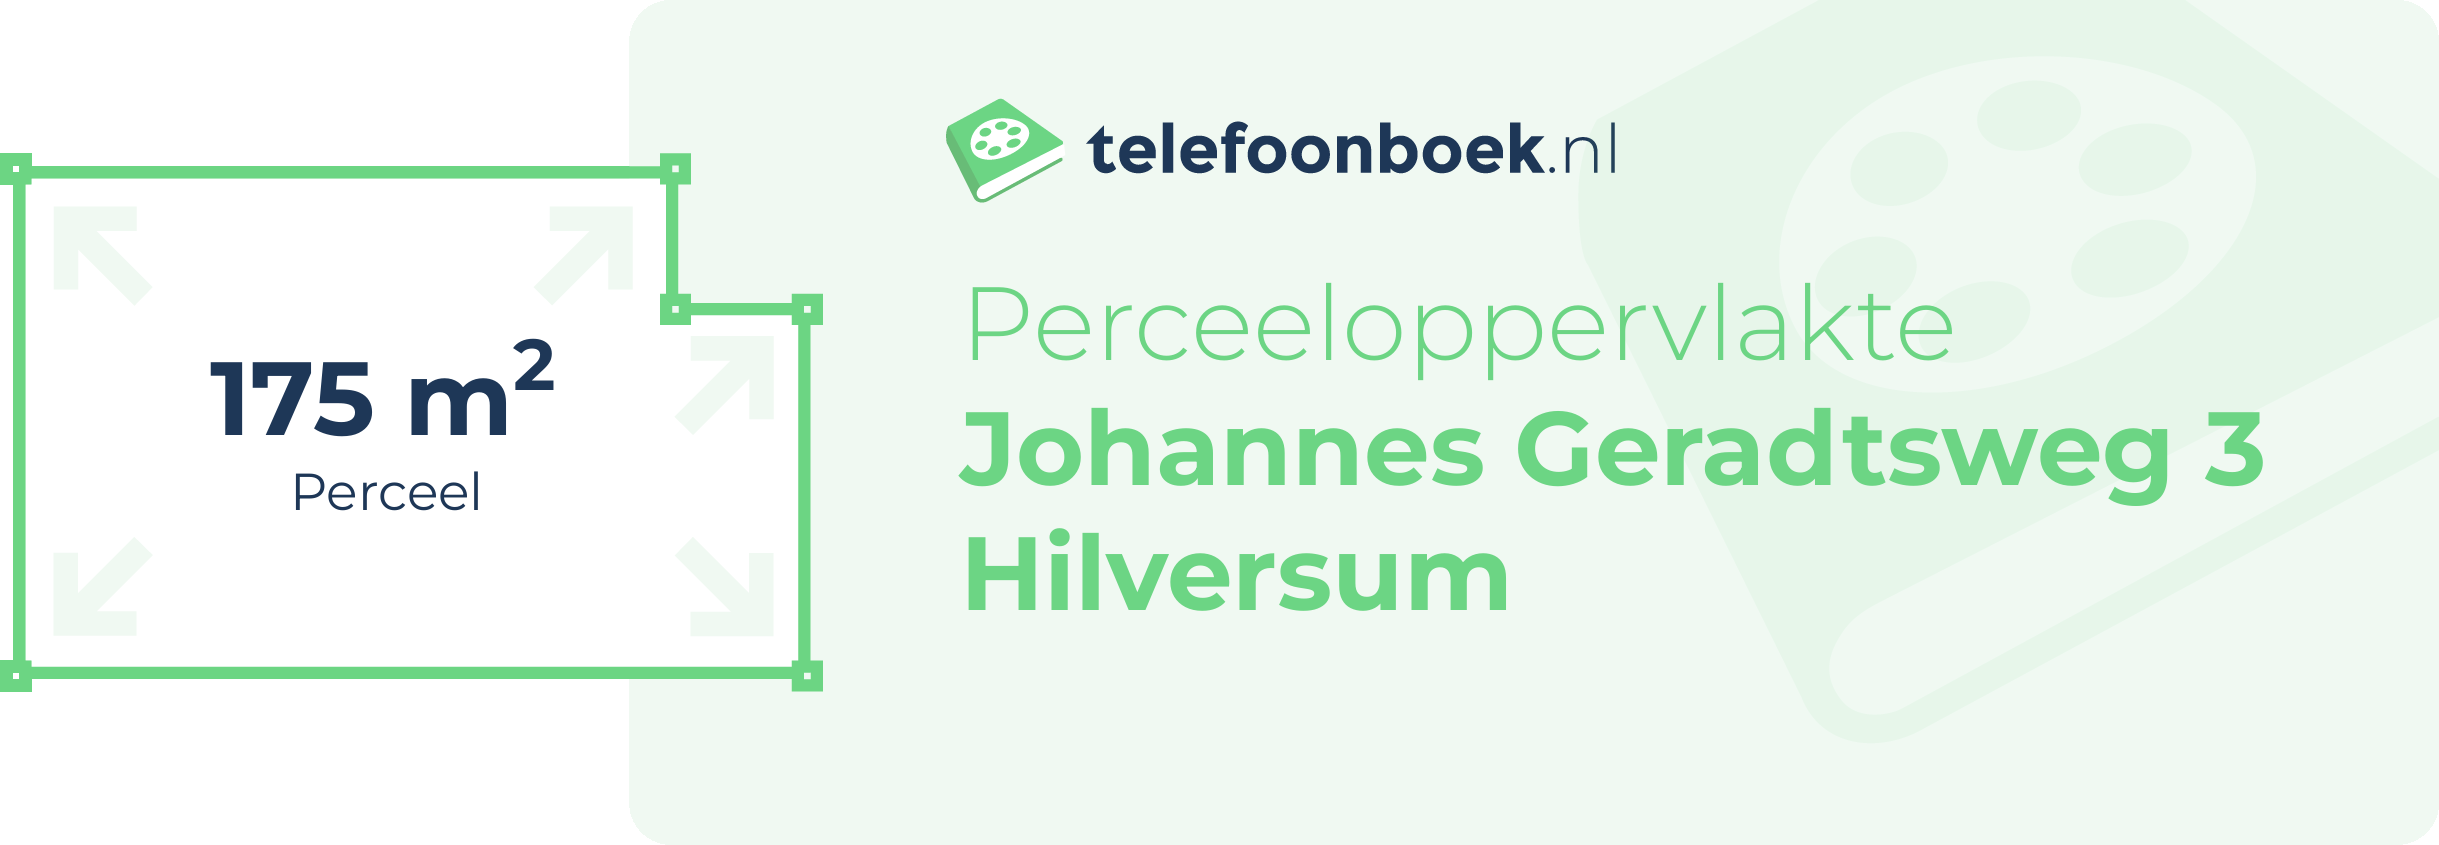 Perceeloppervlakte Johannes Geradtsweg 3 Hilversum